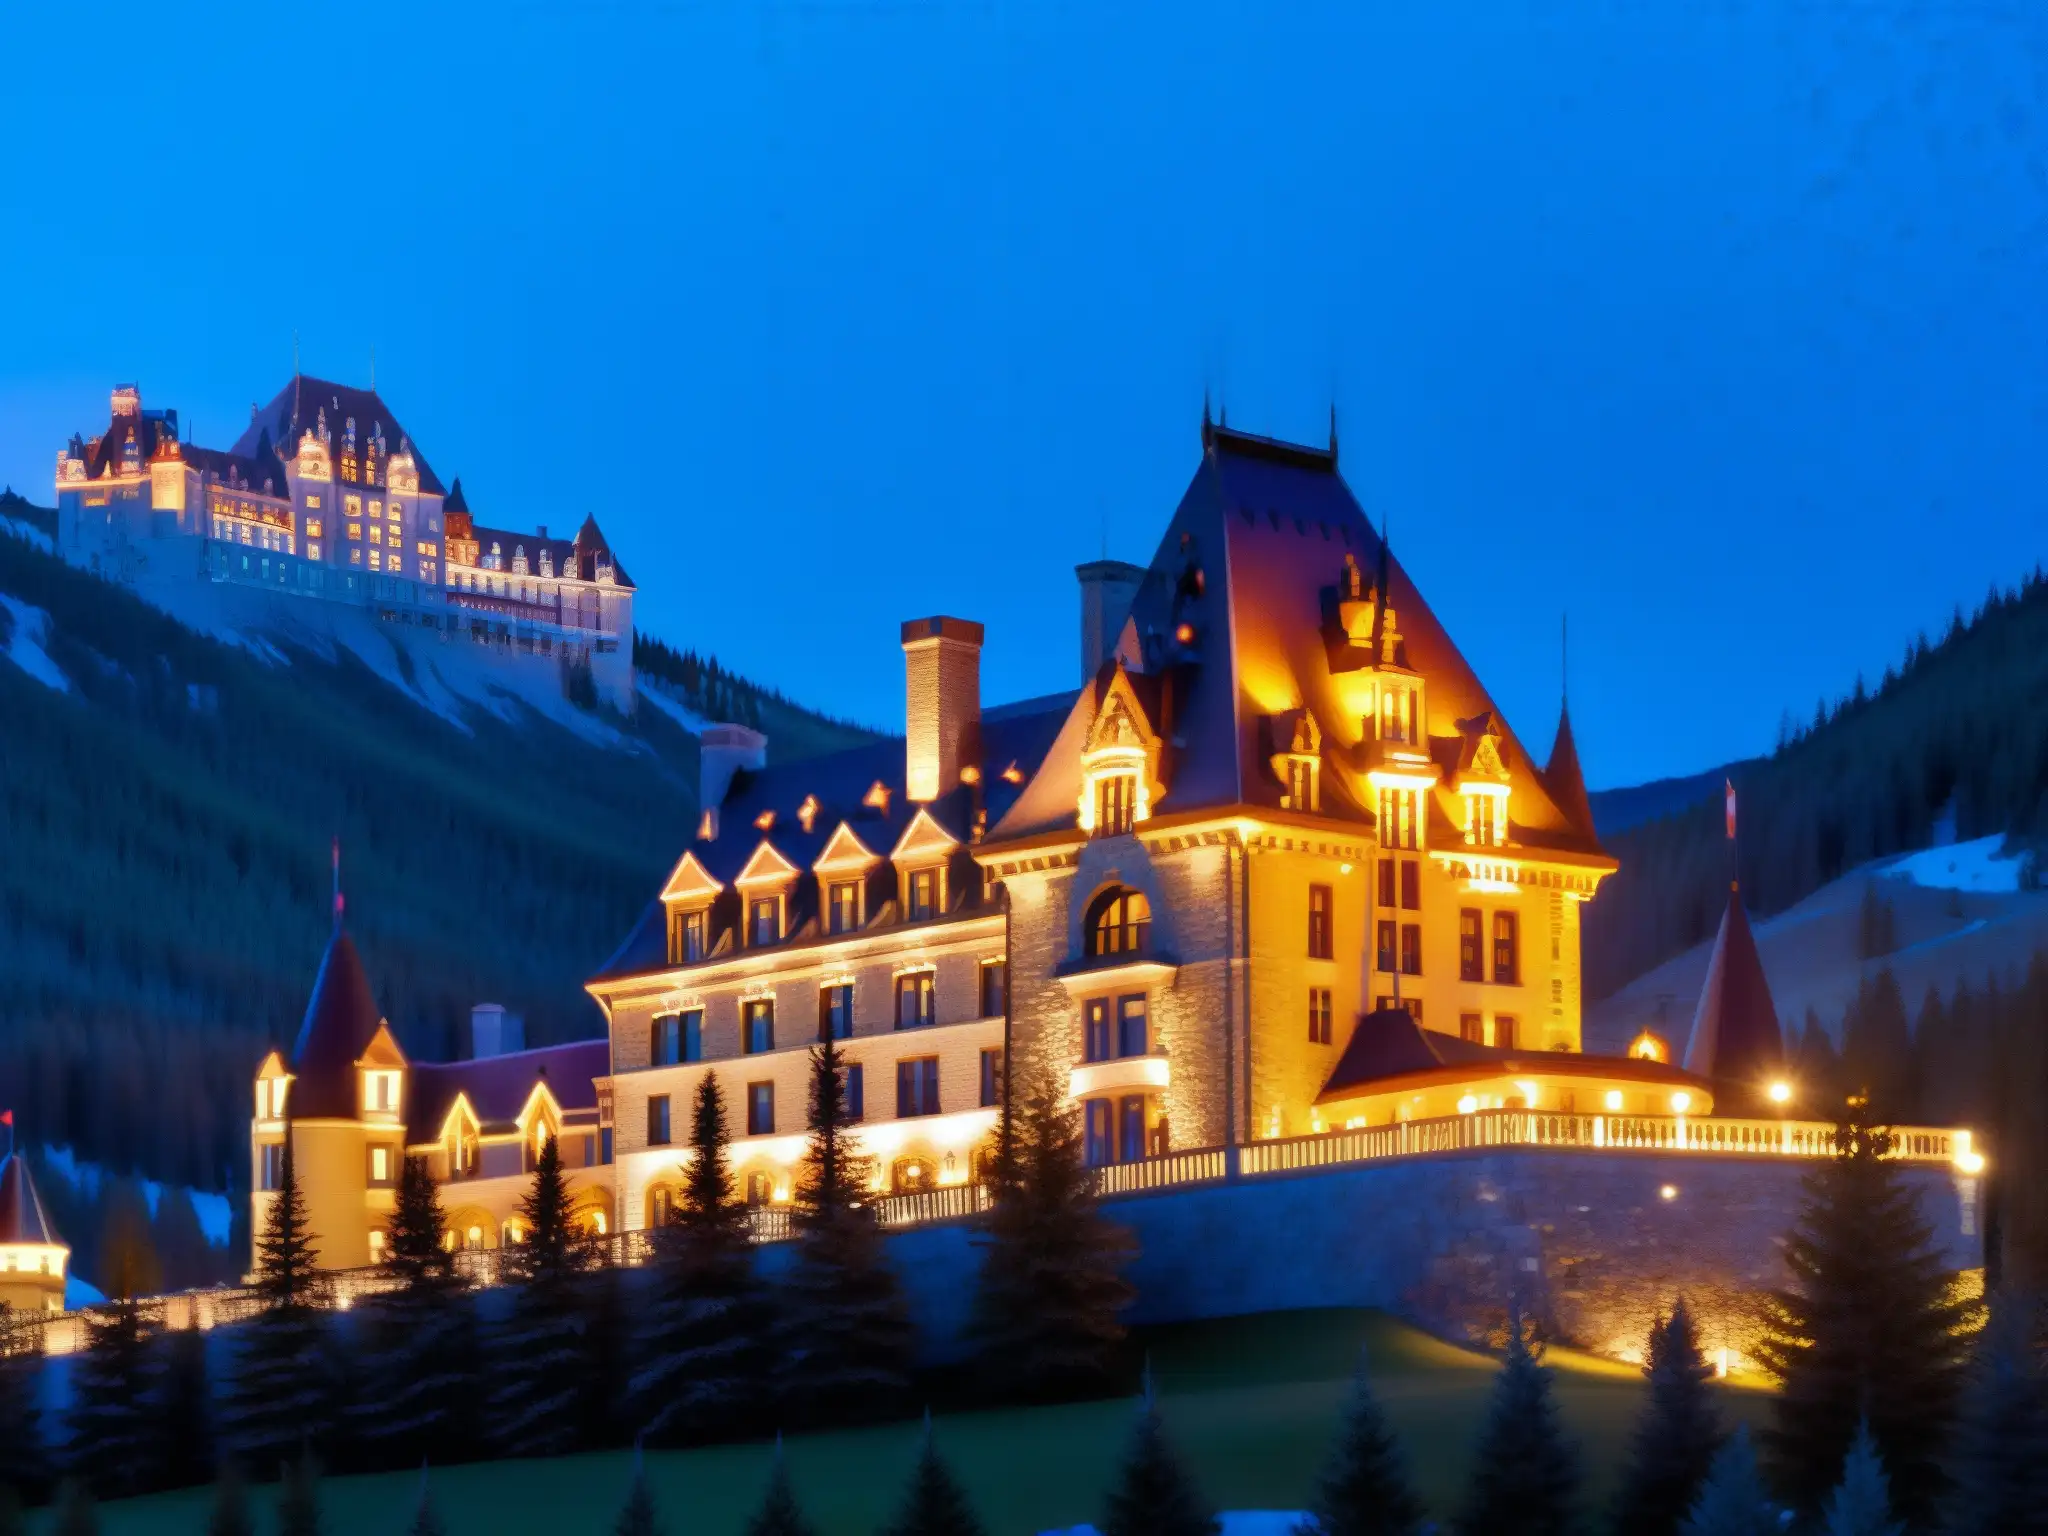 Imagen nocturna del majestuoso hotel Fairmont Banff Springs, con luces cálidas destacando su arquitectura encantada